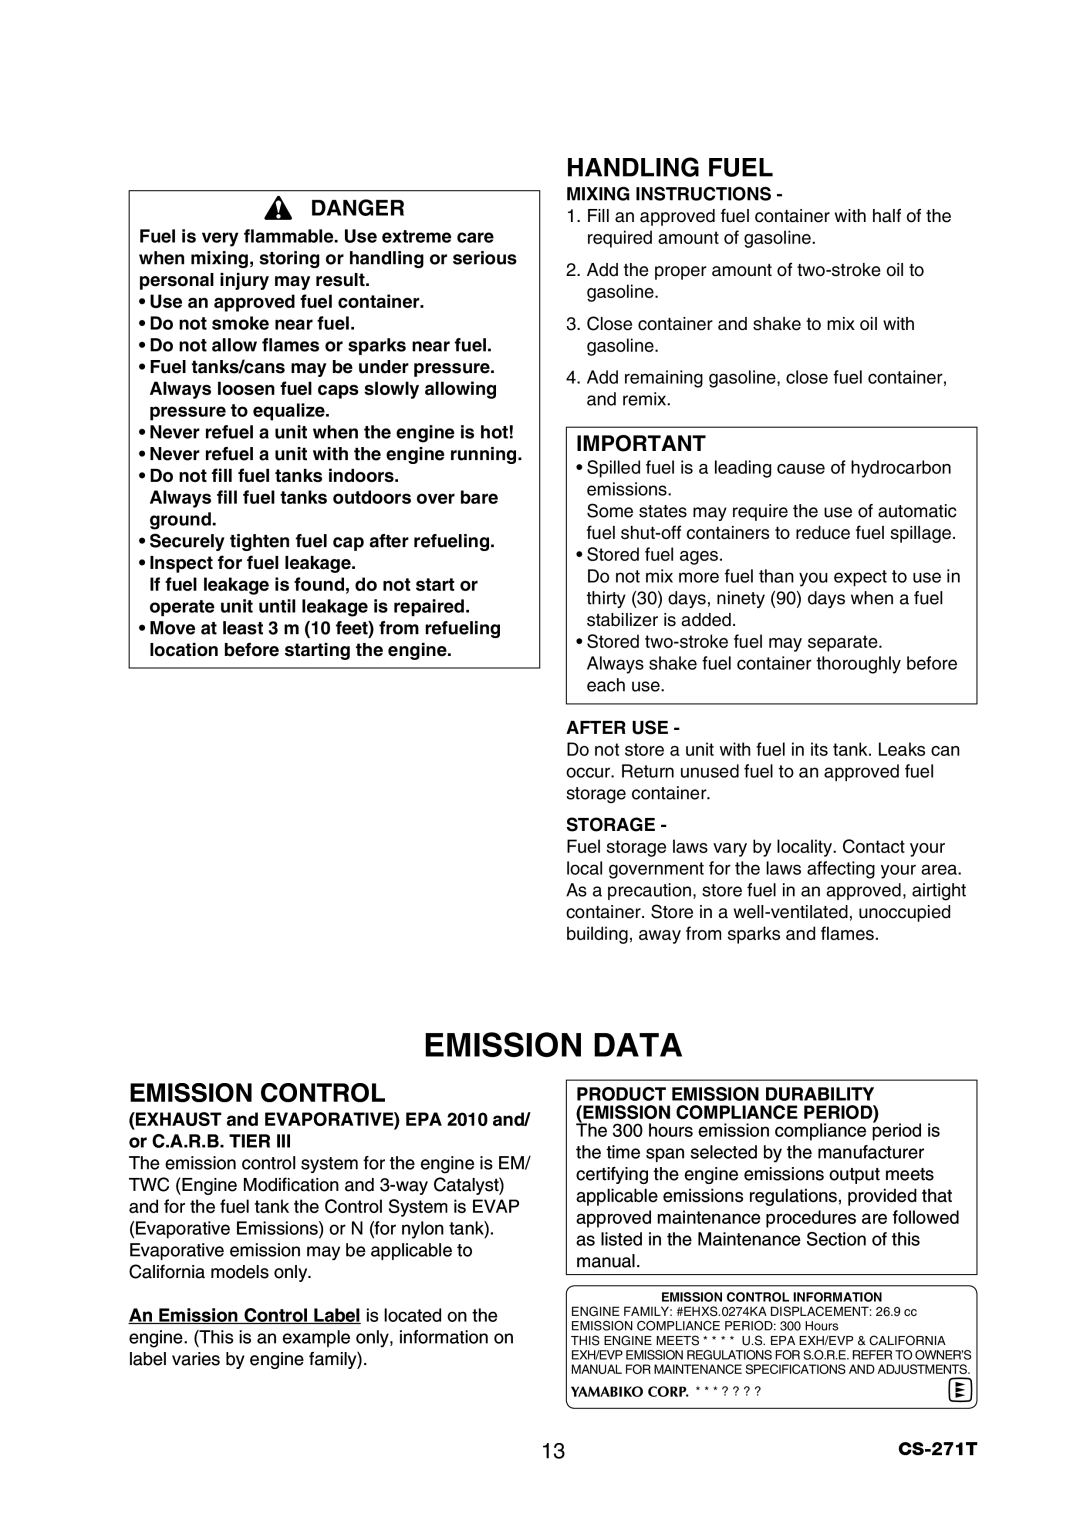 Echo CS-271T instruction manual Emission Data, Handling Fuel, Emission Control 